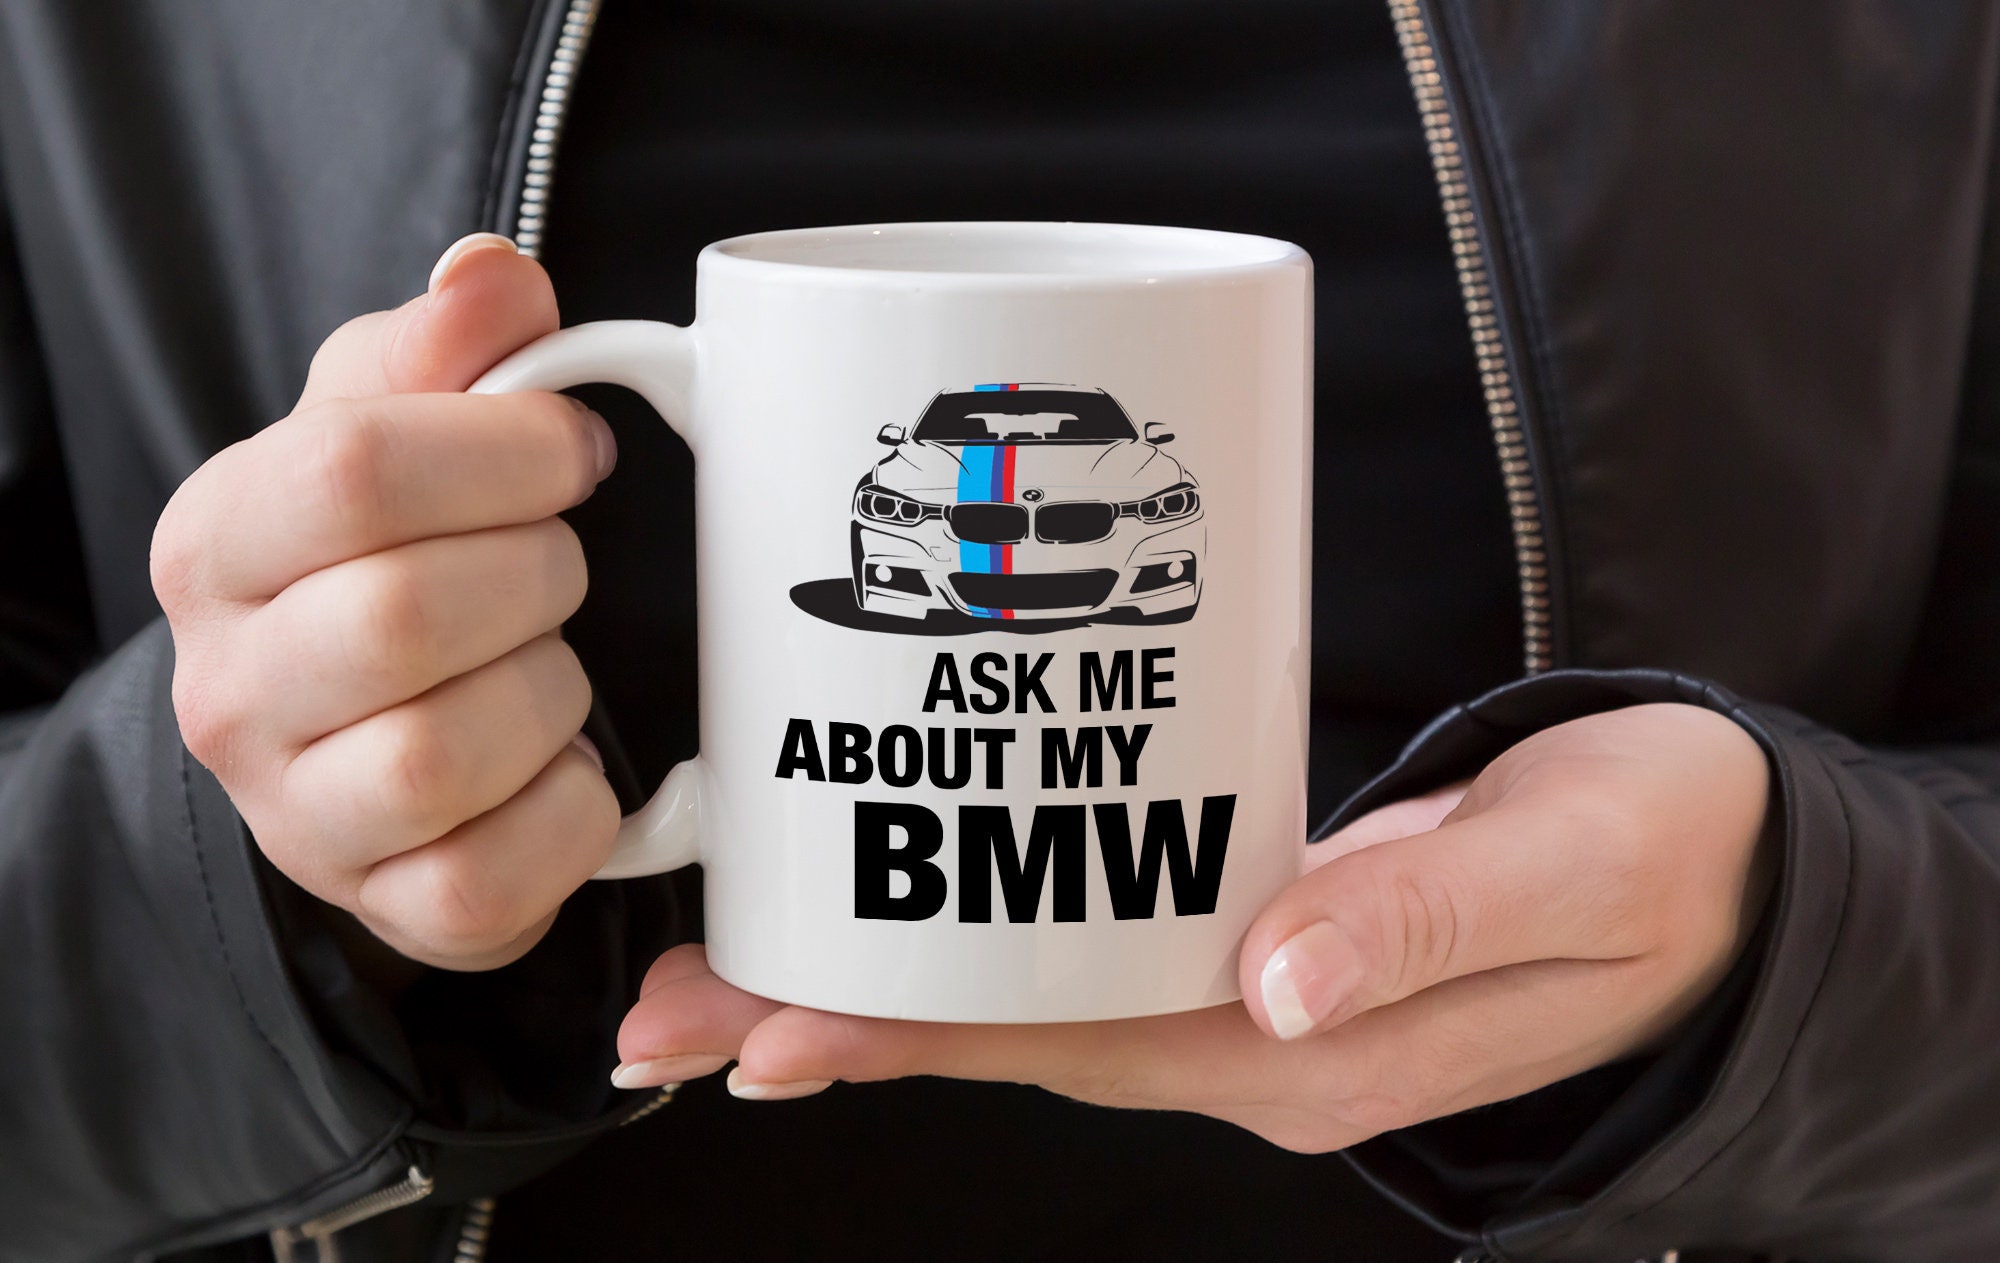 BMW Make Life a Ride enamel coffee mug (black) buy cheap ▷ bmw